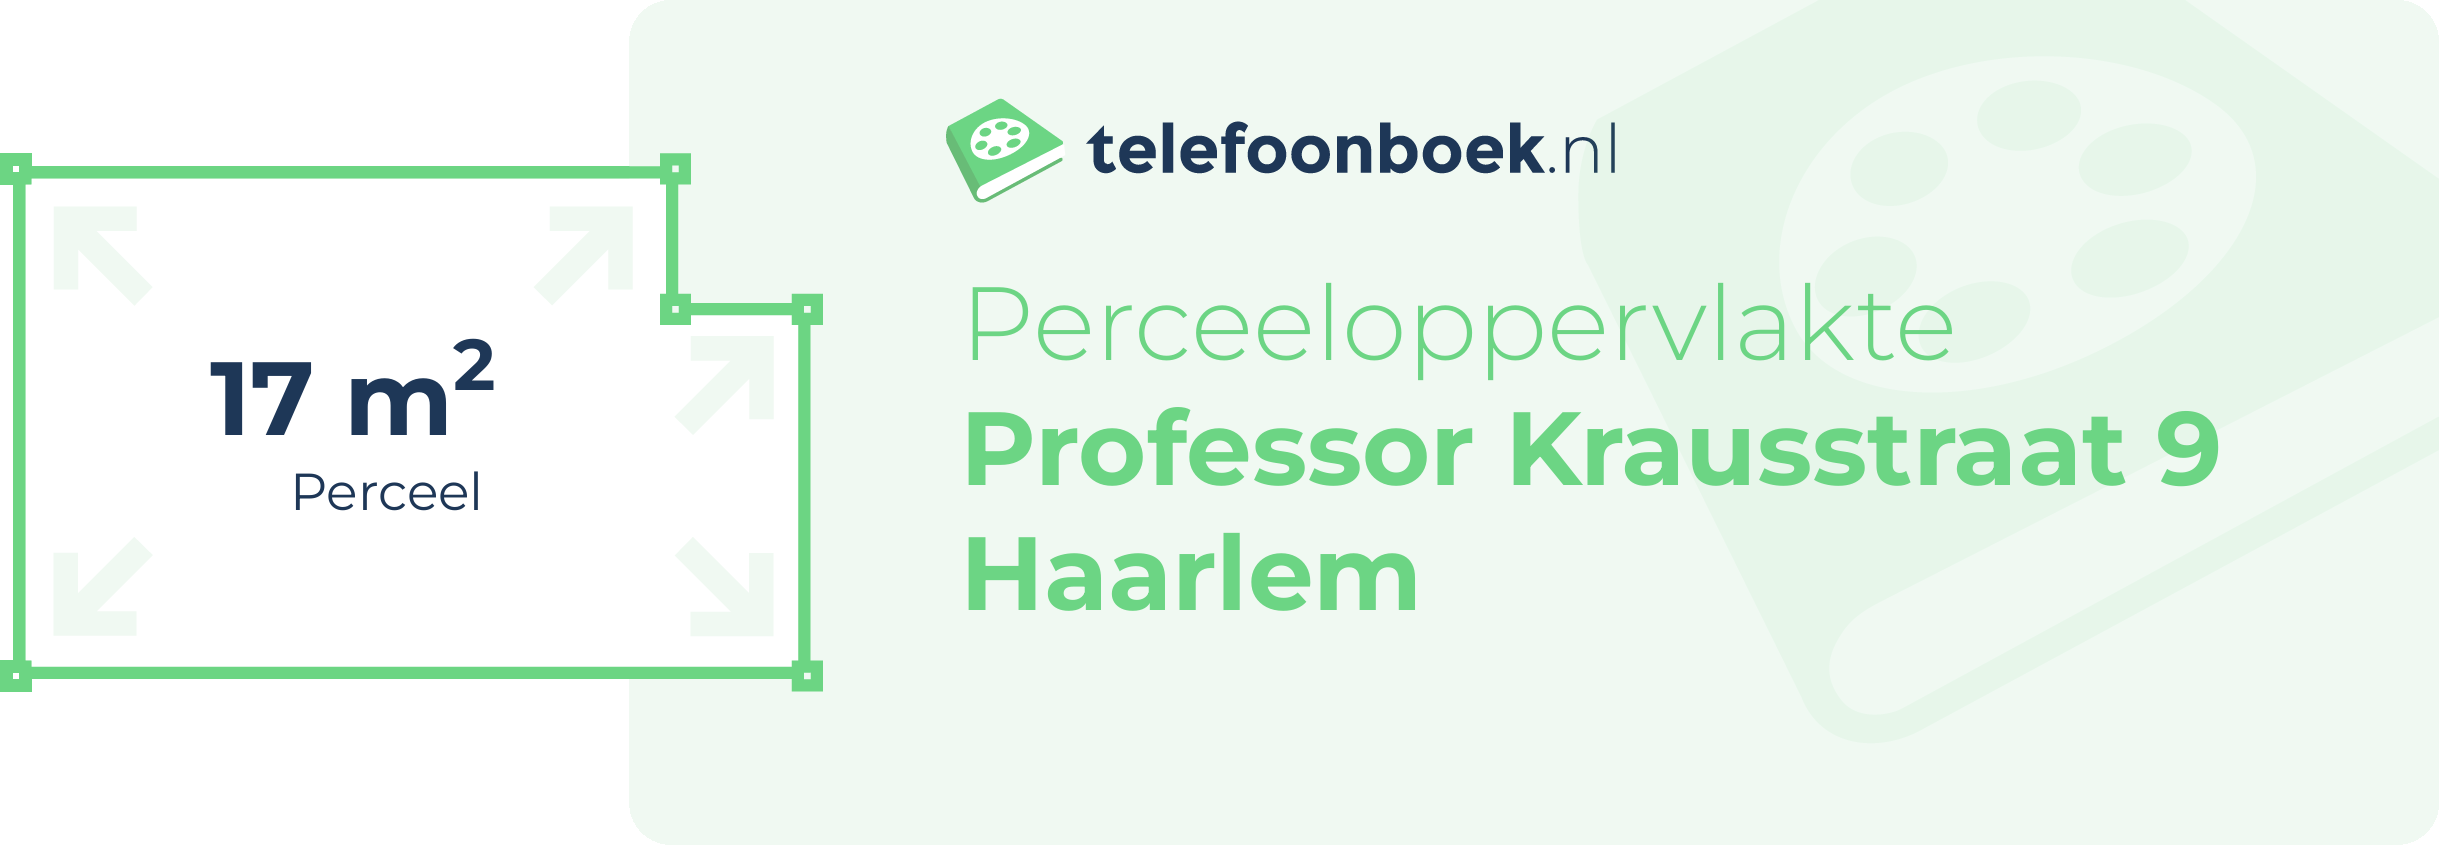 Perceeloppervlakte Professor Krausstraat 9 Haarlem